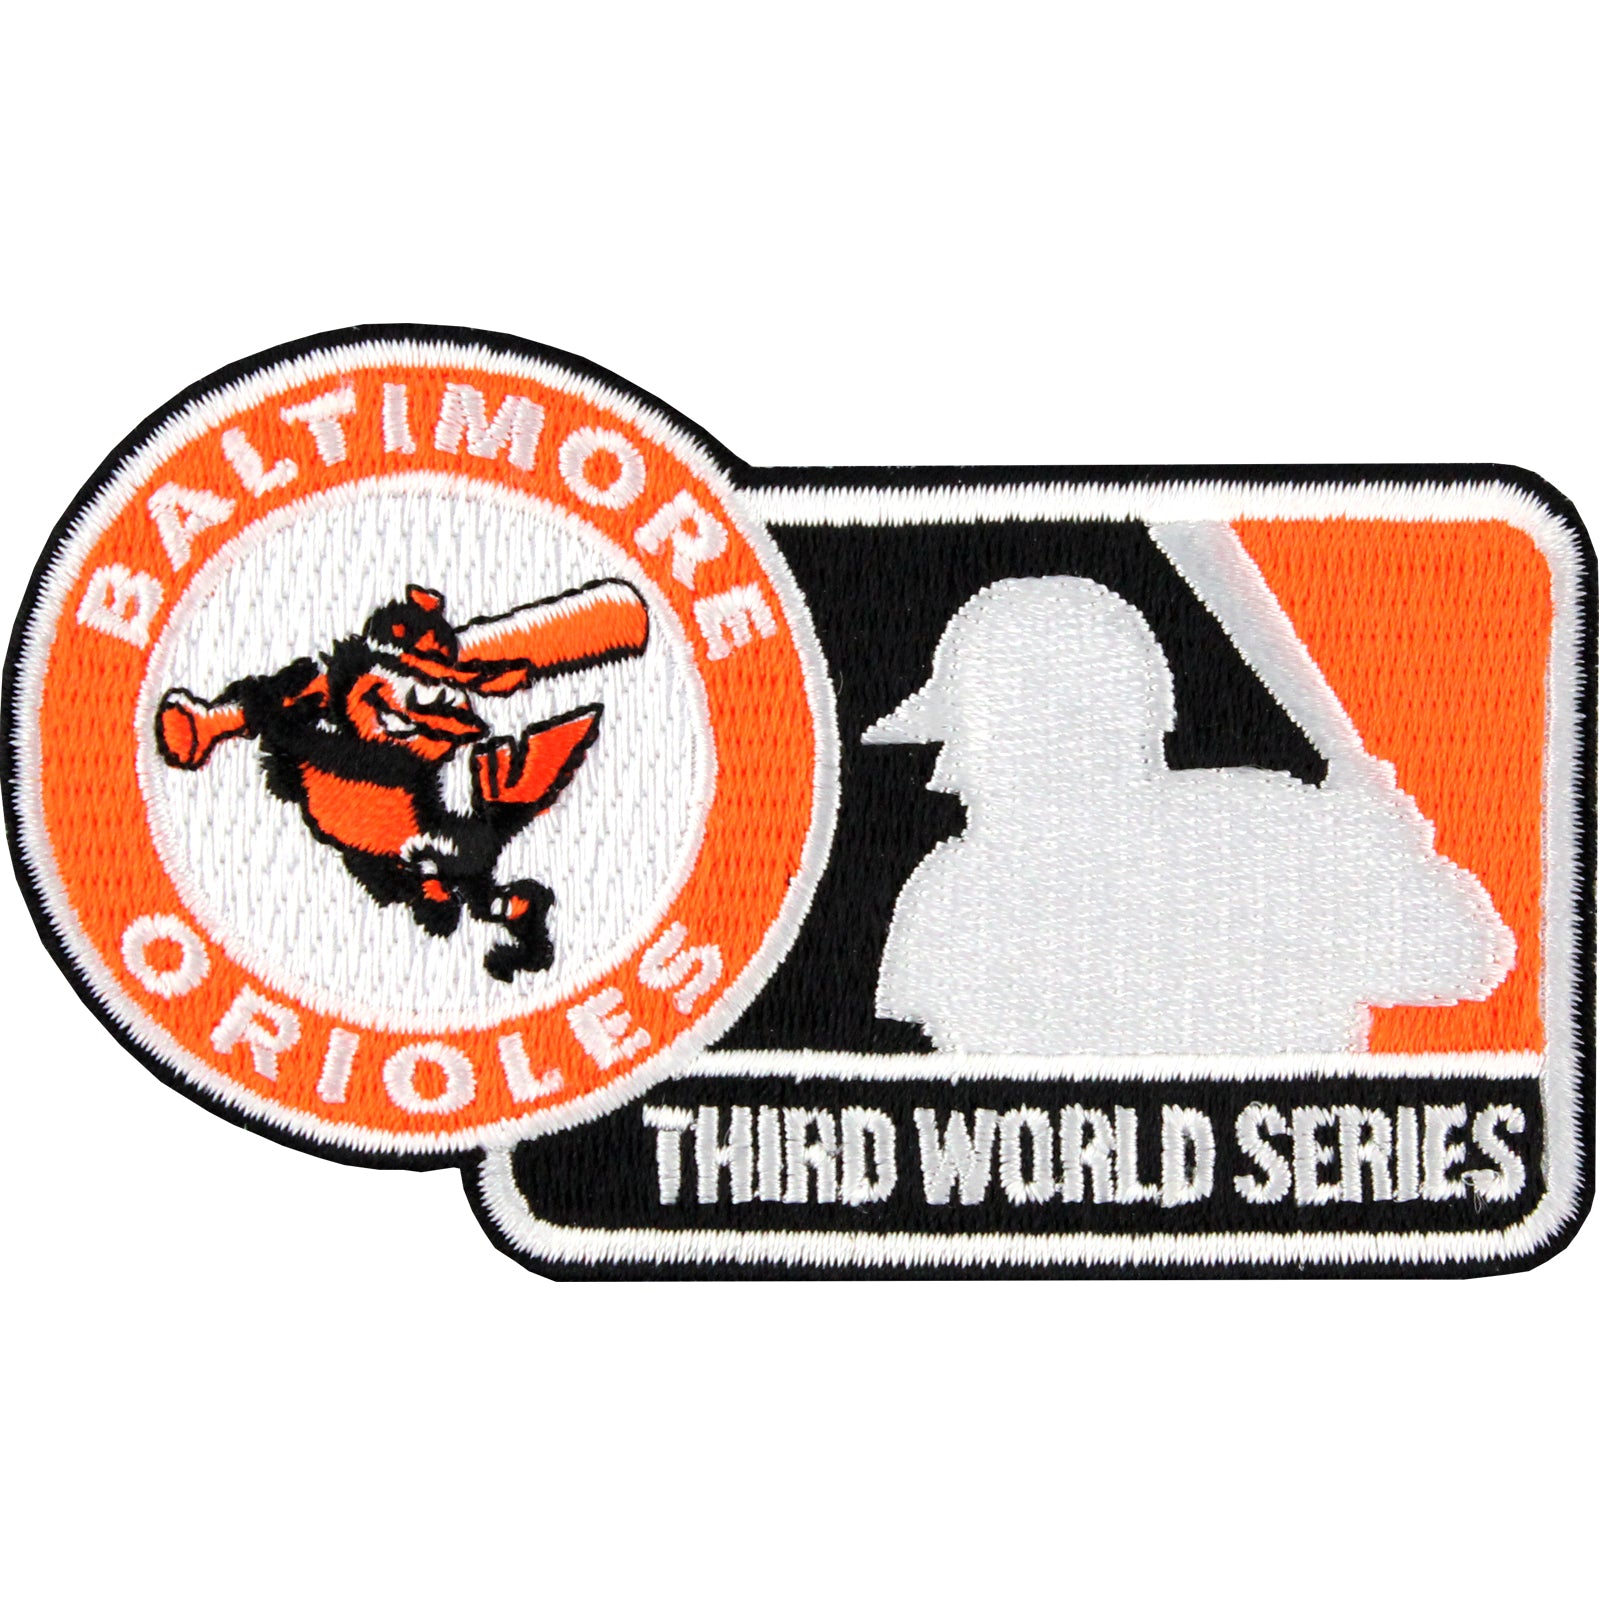 Baltimore Orioles 1970 World Series Champions Commemorative Patch